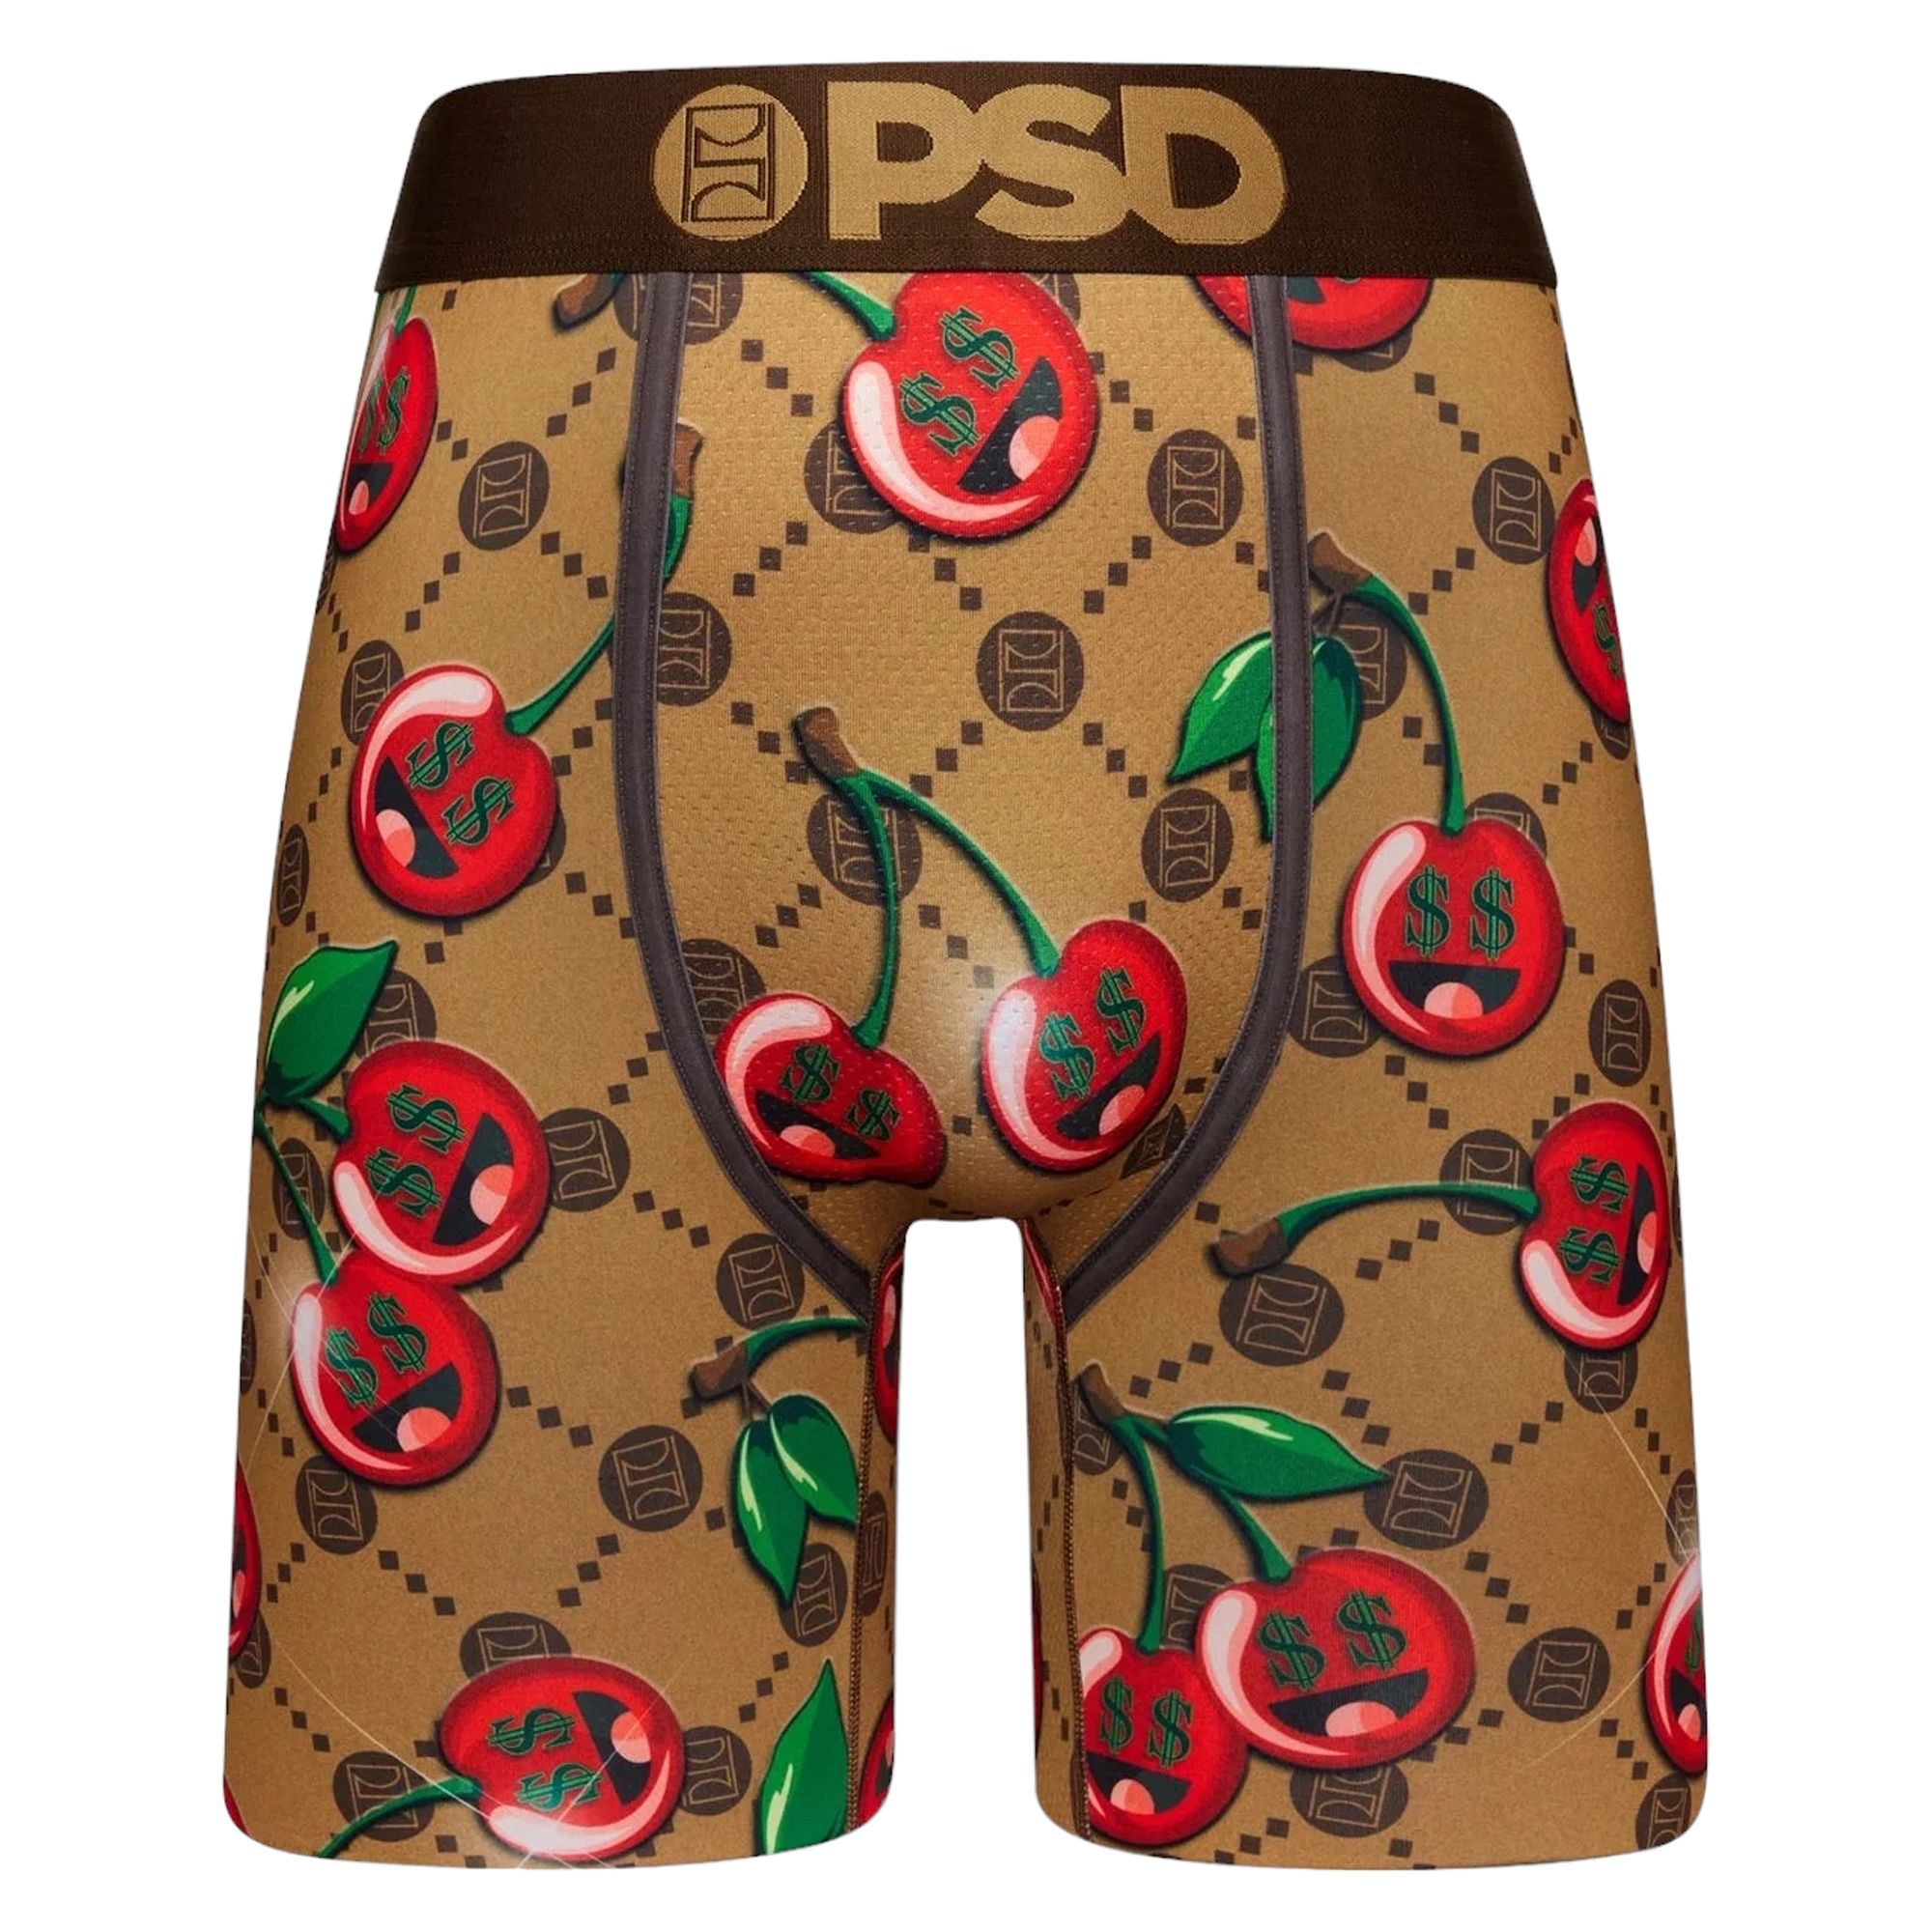 PSD Underwear Men's Boxer Briefs (Multi/69 Hp/M), Multi/69 Hp, Medium